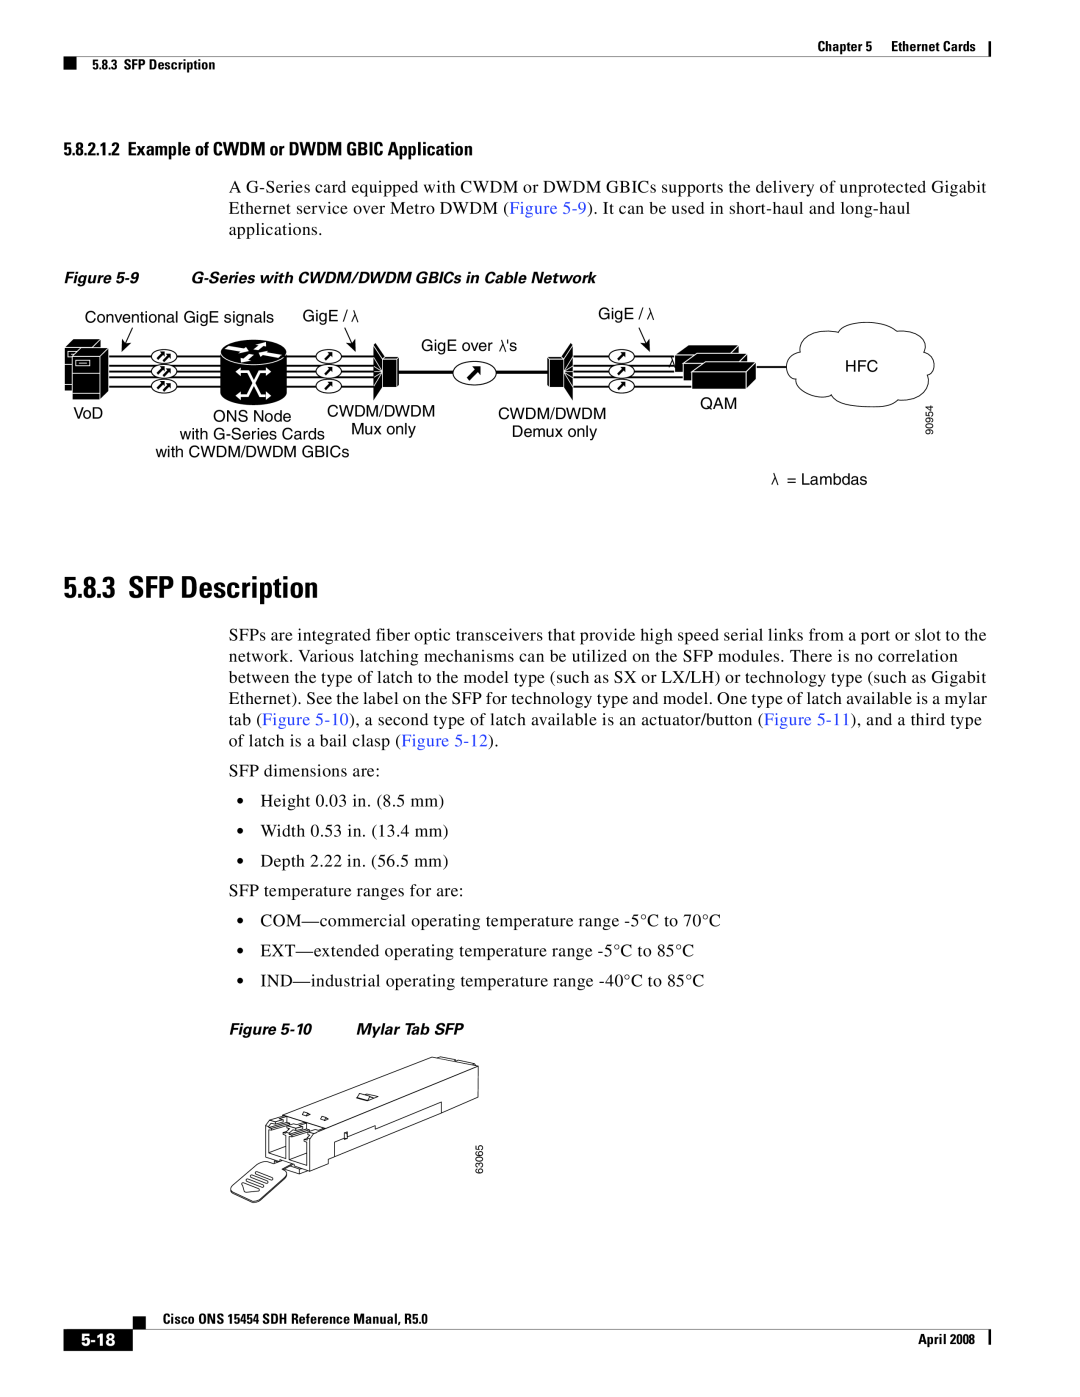 Cisco Systems ONS 15454 SDH specifications SFP Description, 5-18 